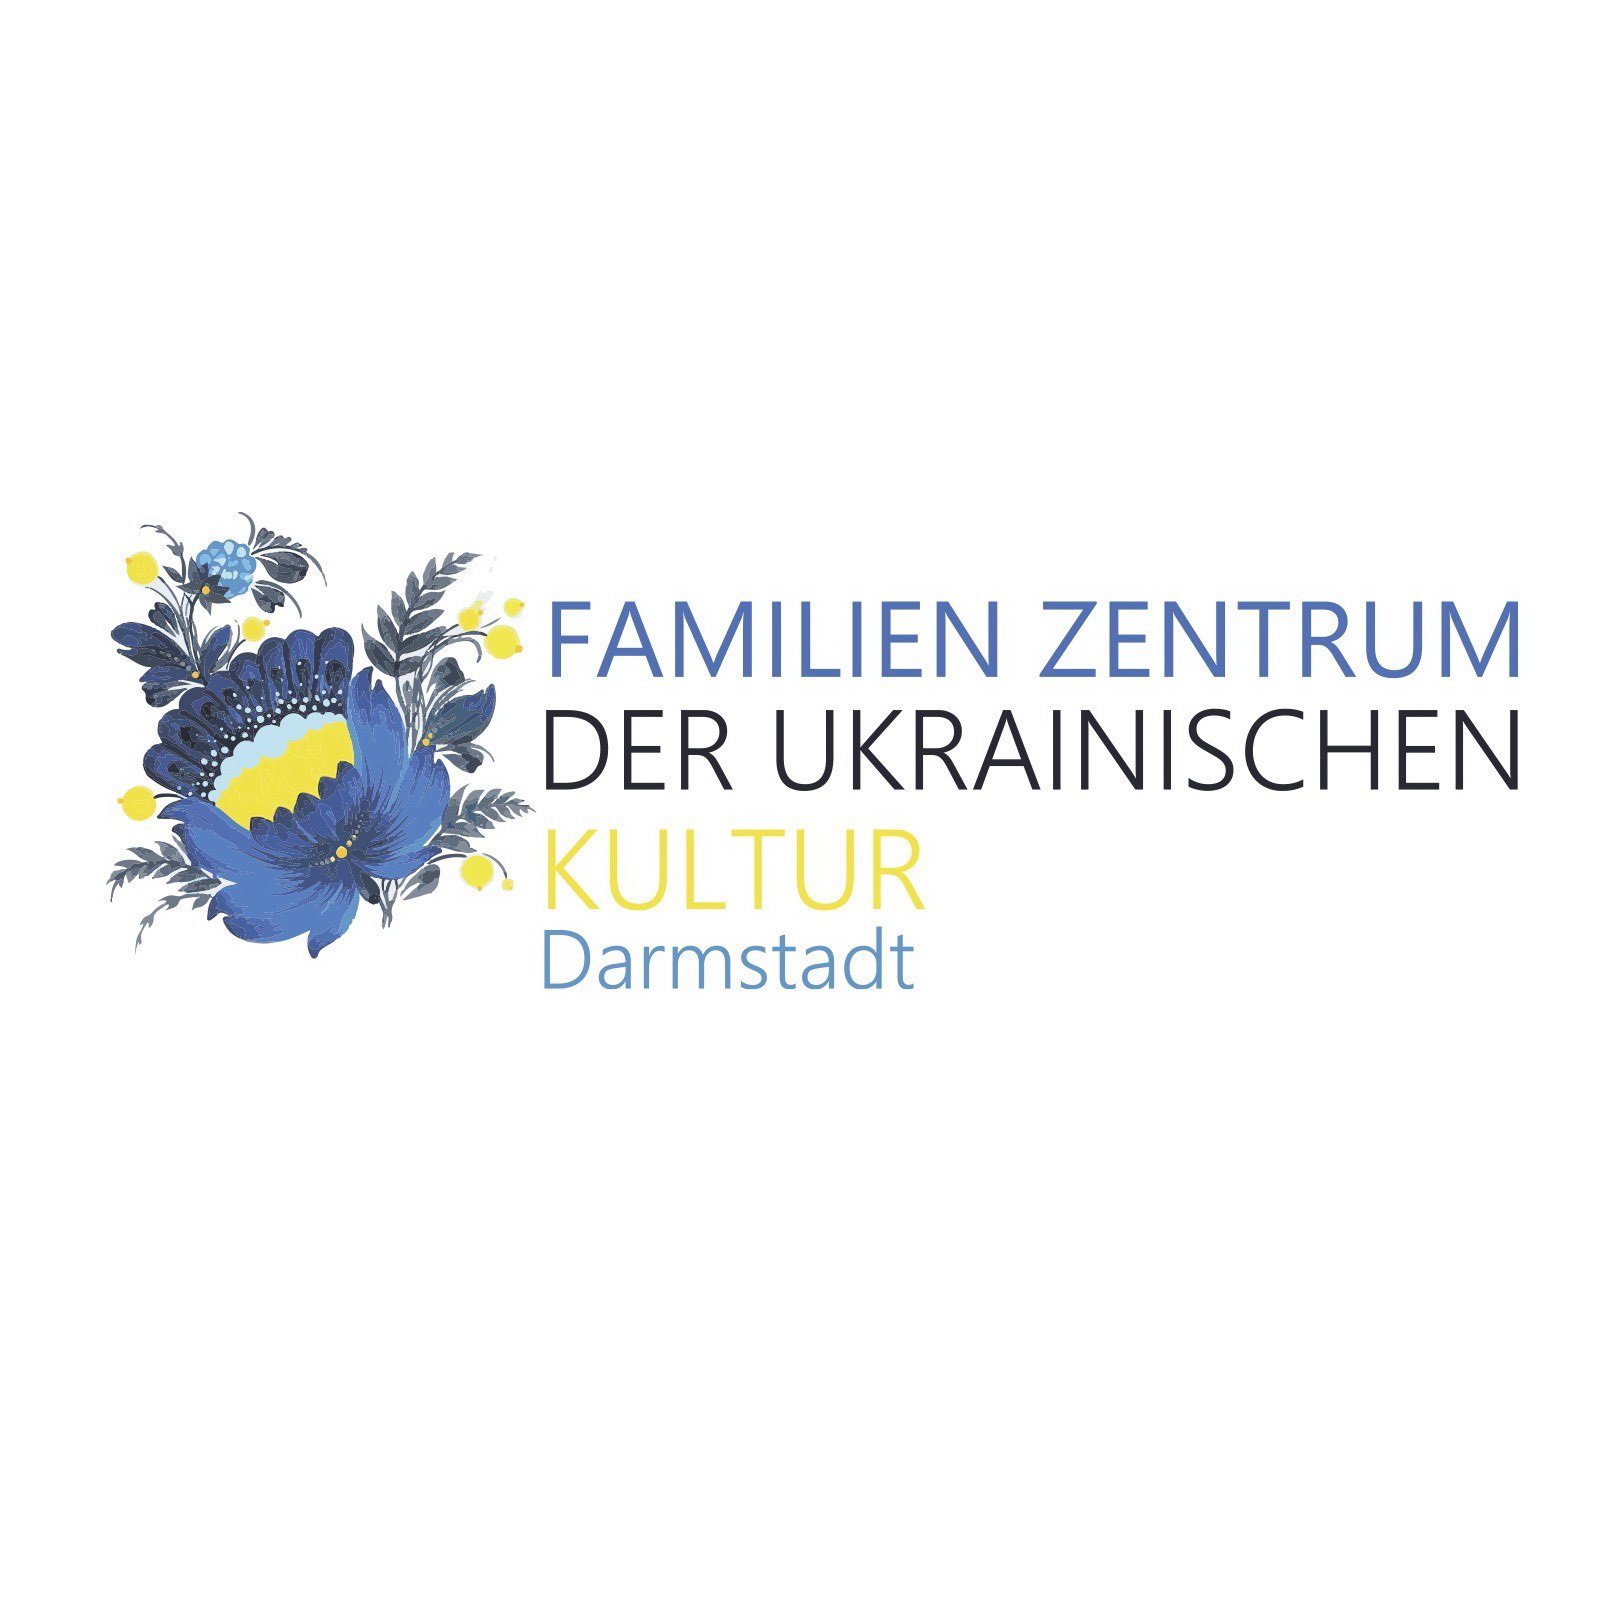 Familien-Zentrum der ukrainischen Kultur, Darmstadt